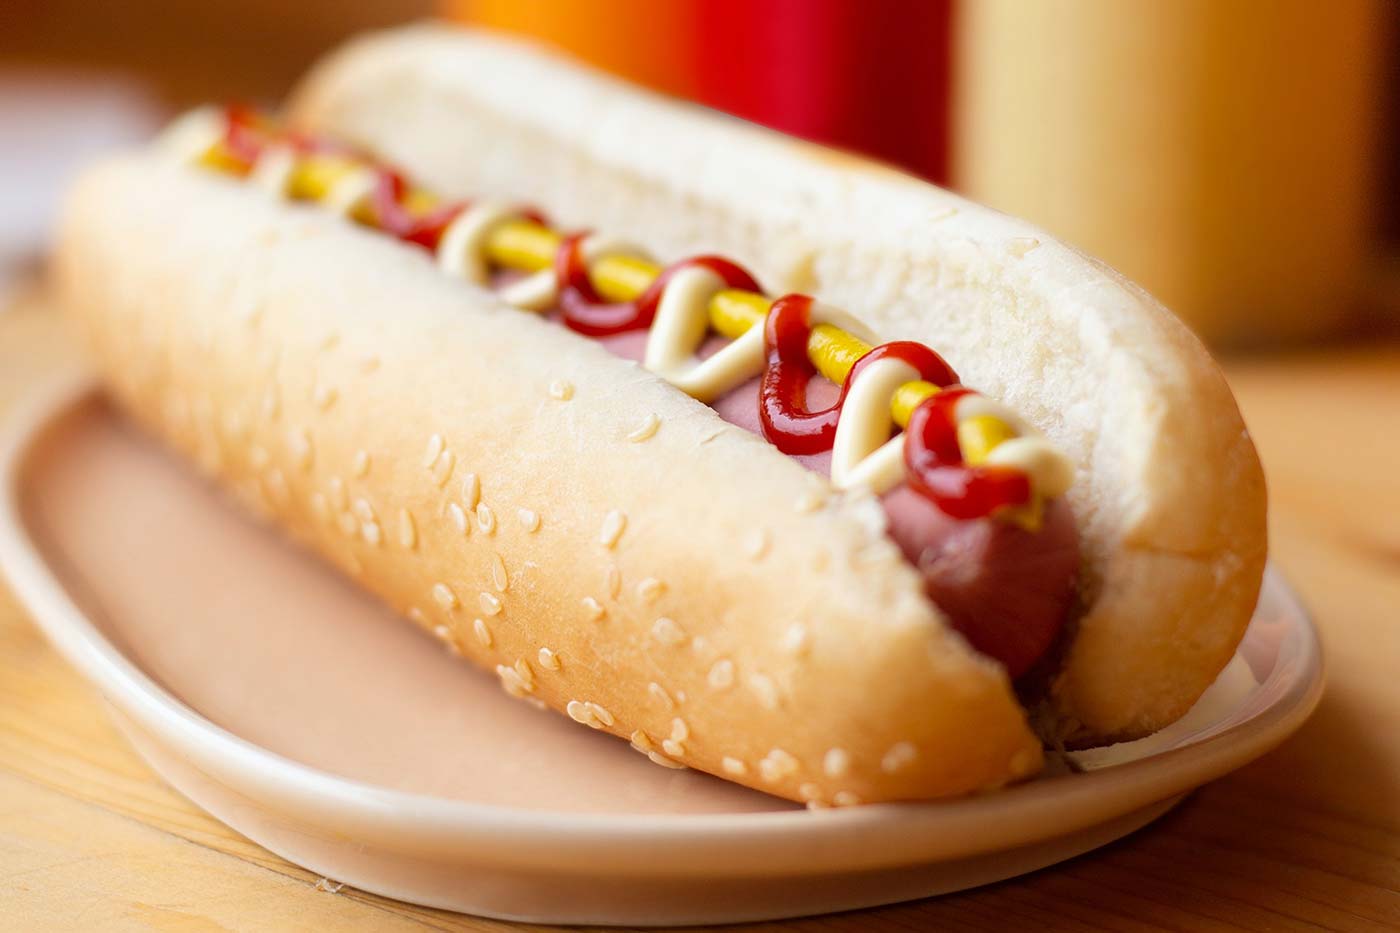 Single basic hot dog on plate, by Jessica Loaiza via Unsplash